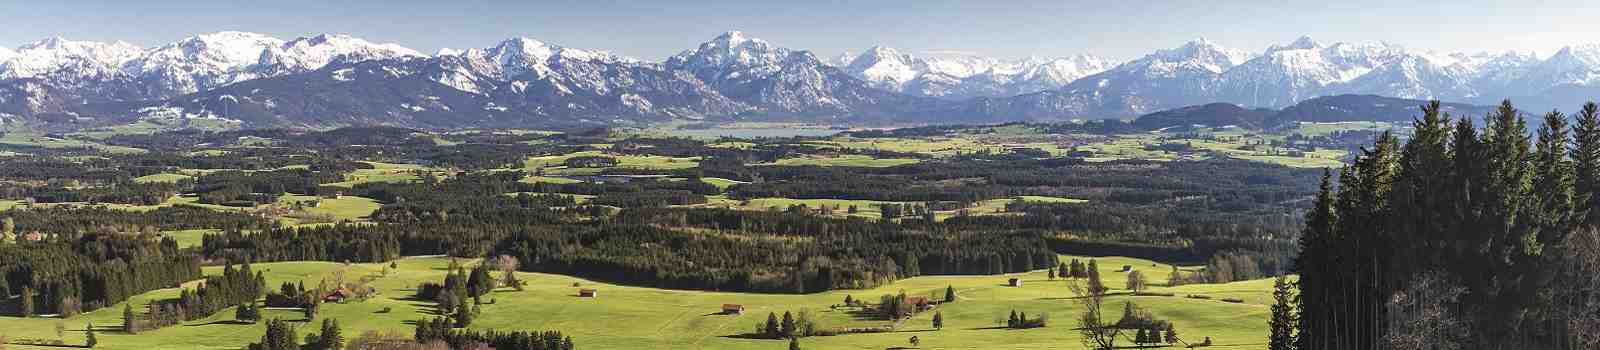 Germany  Bavaria  Allgaeu  panoramic view to alps mountains - Bilder shutterstock 638827960 